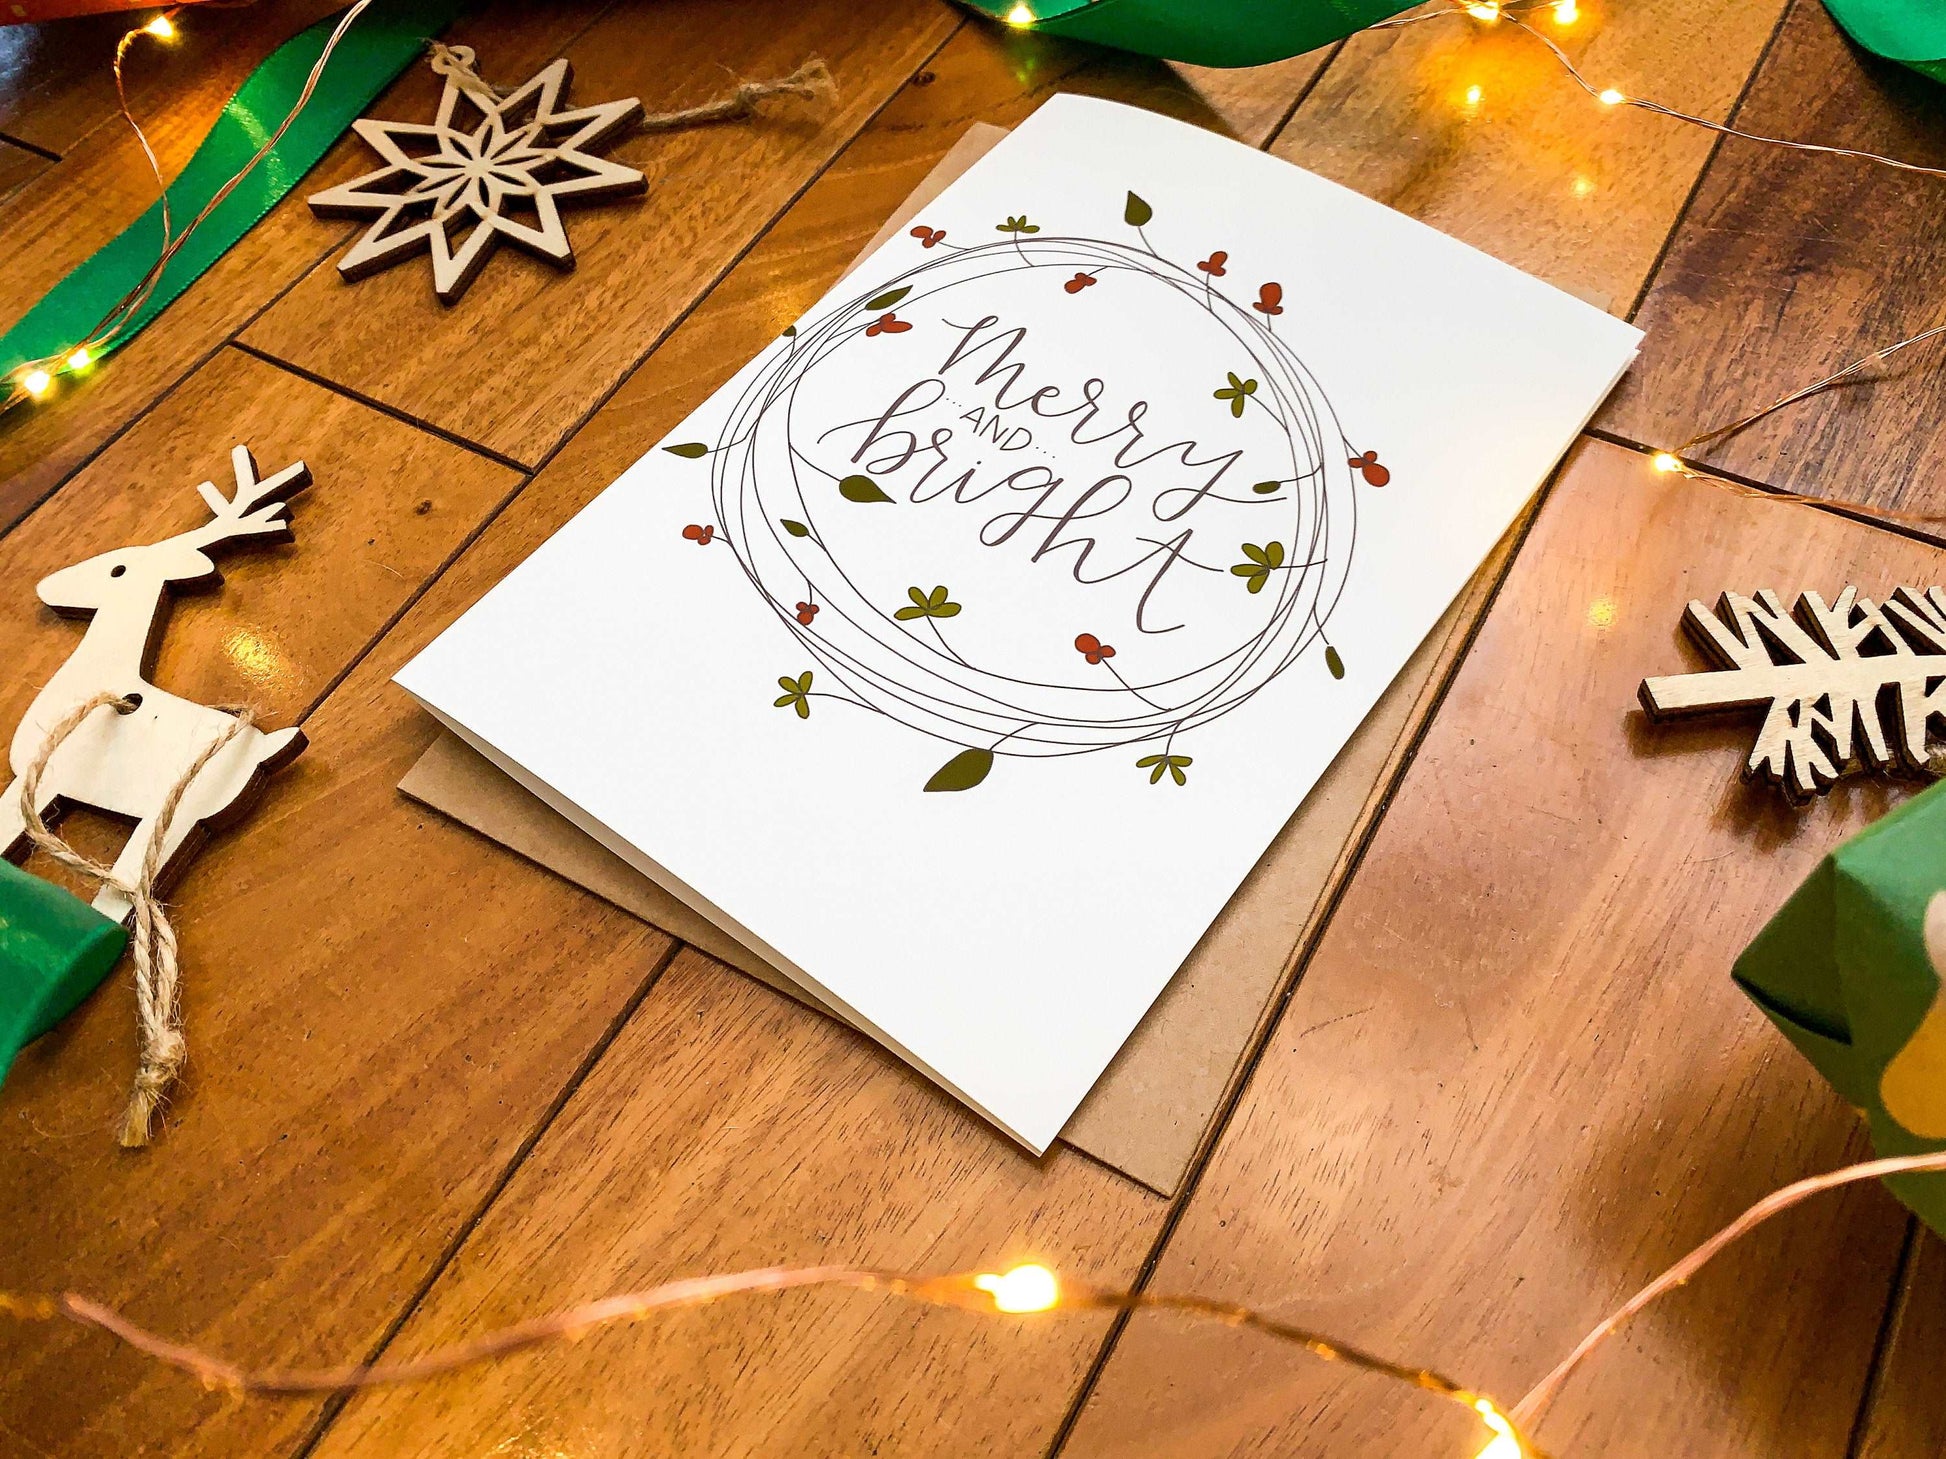 Cute Handmade Merry & Bright Wreath Holiday Card by StoneDonut Design